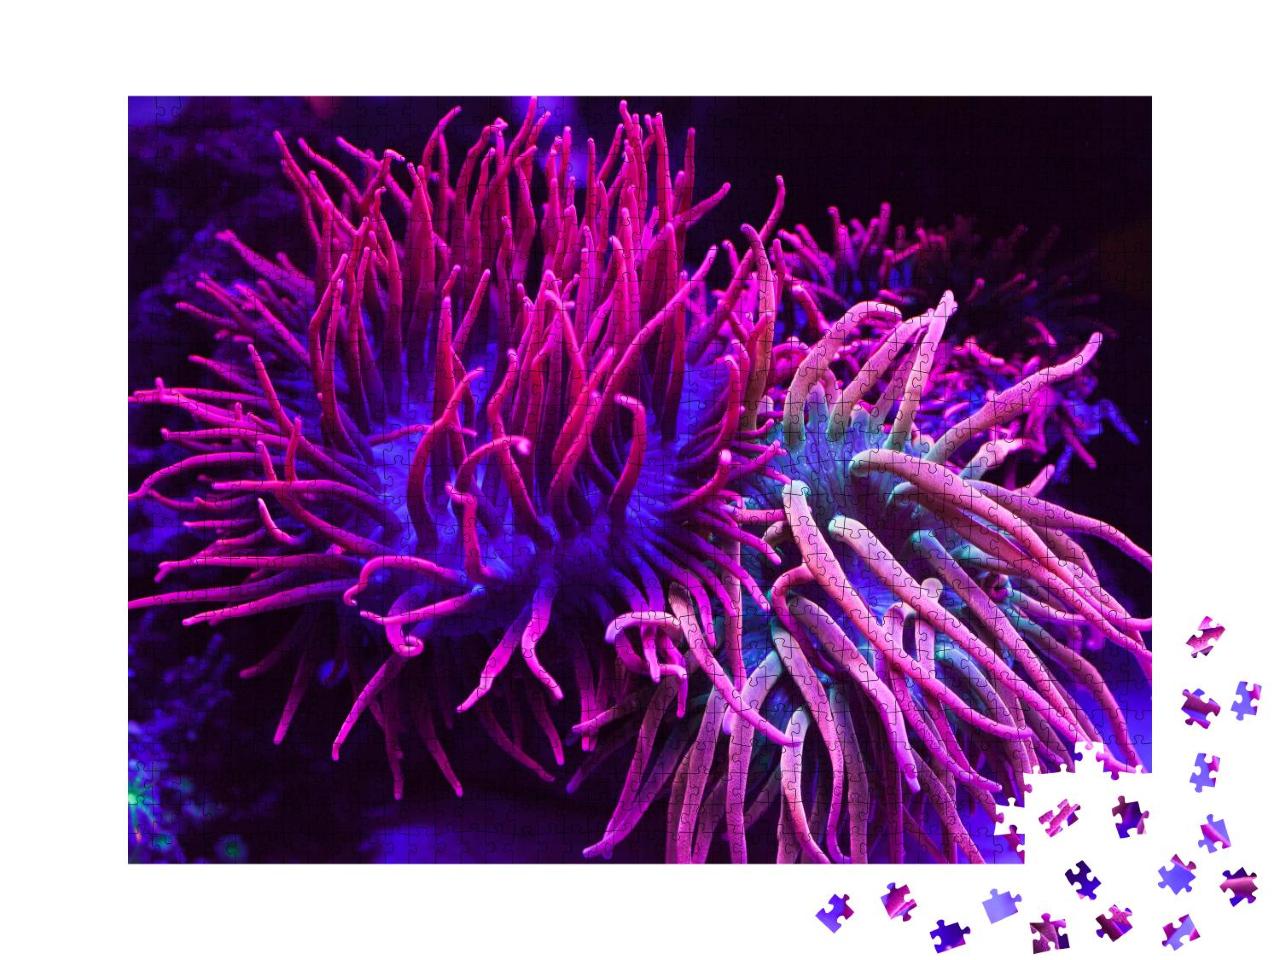 Puzzle 1000 Teile „Strahlend violette Korallen in einem Meeresaquarium“